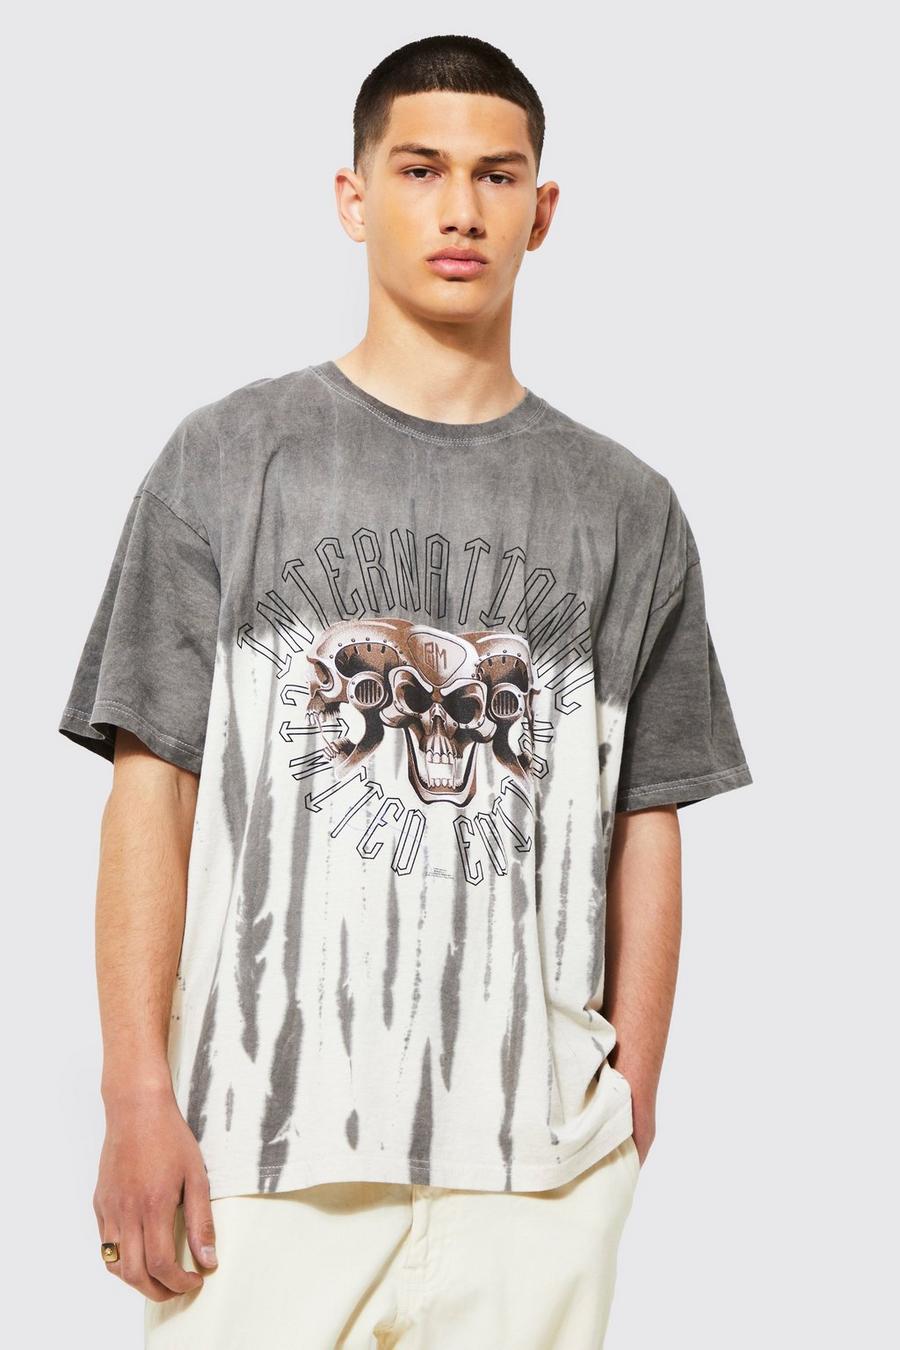 boohoo Mens Oversized Bleach Tie Dye Graphic T-Shirt - Grey S